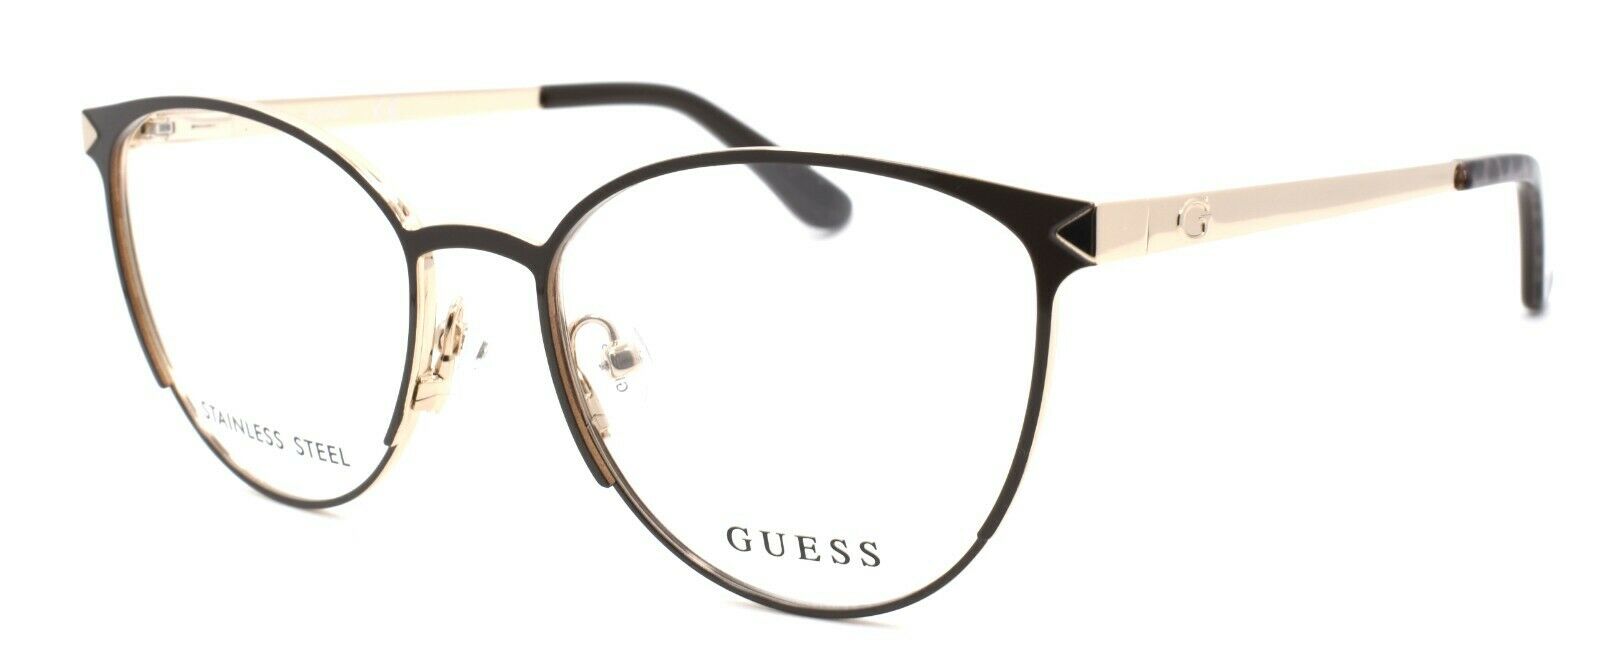 1-GUESS GU2665 049 Women's Eyeglasses Frame 51-17-135 Dark Brown + Case-664689954377-IKSpecs